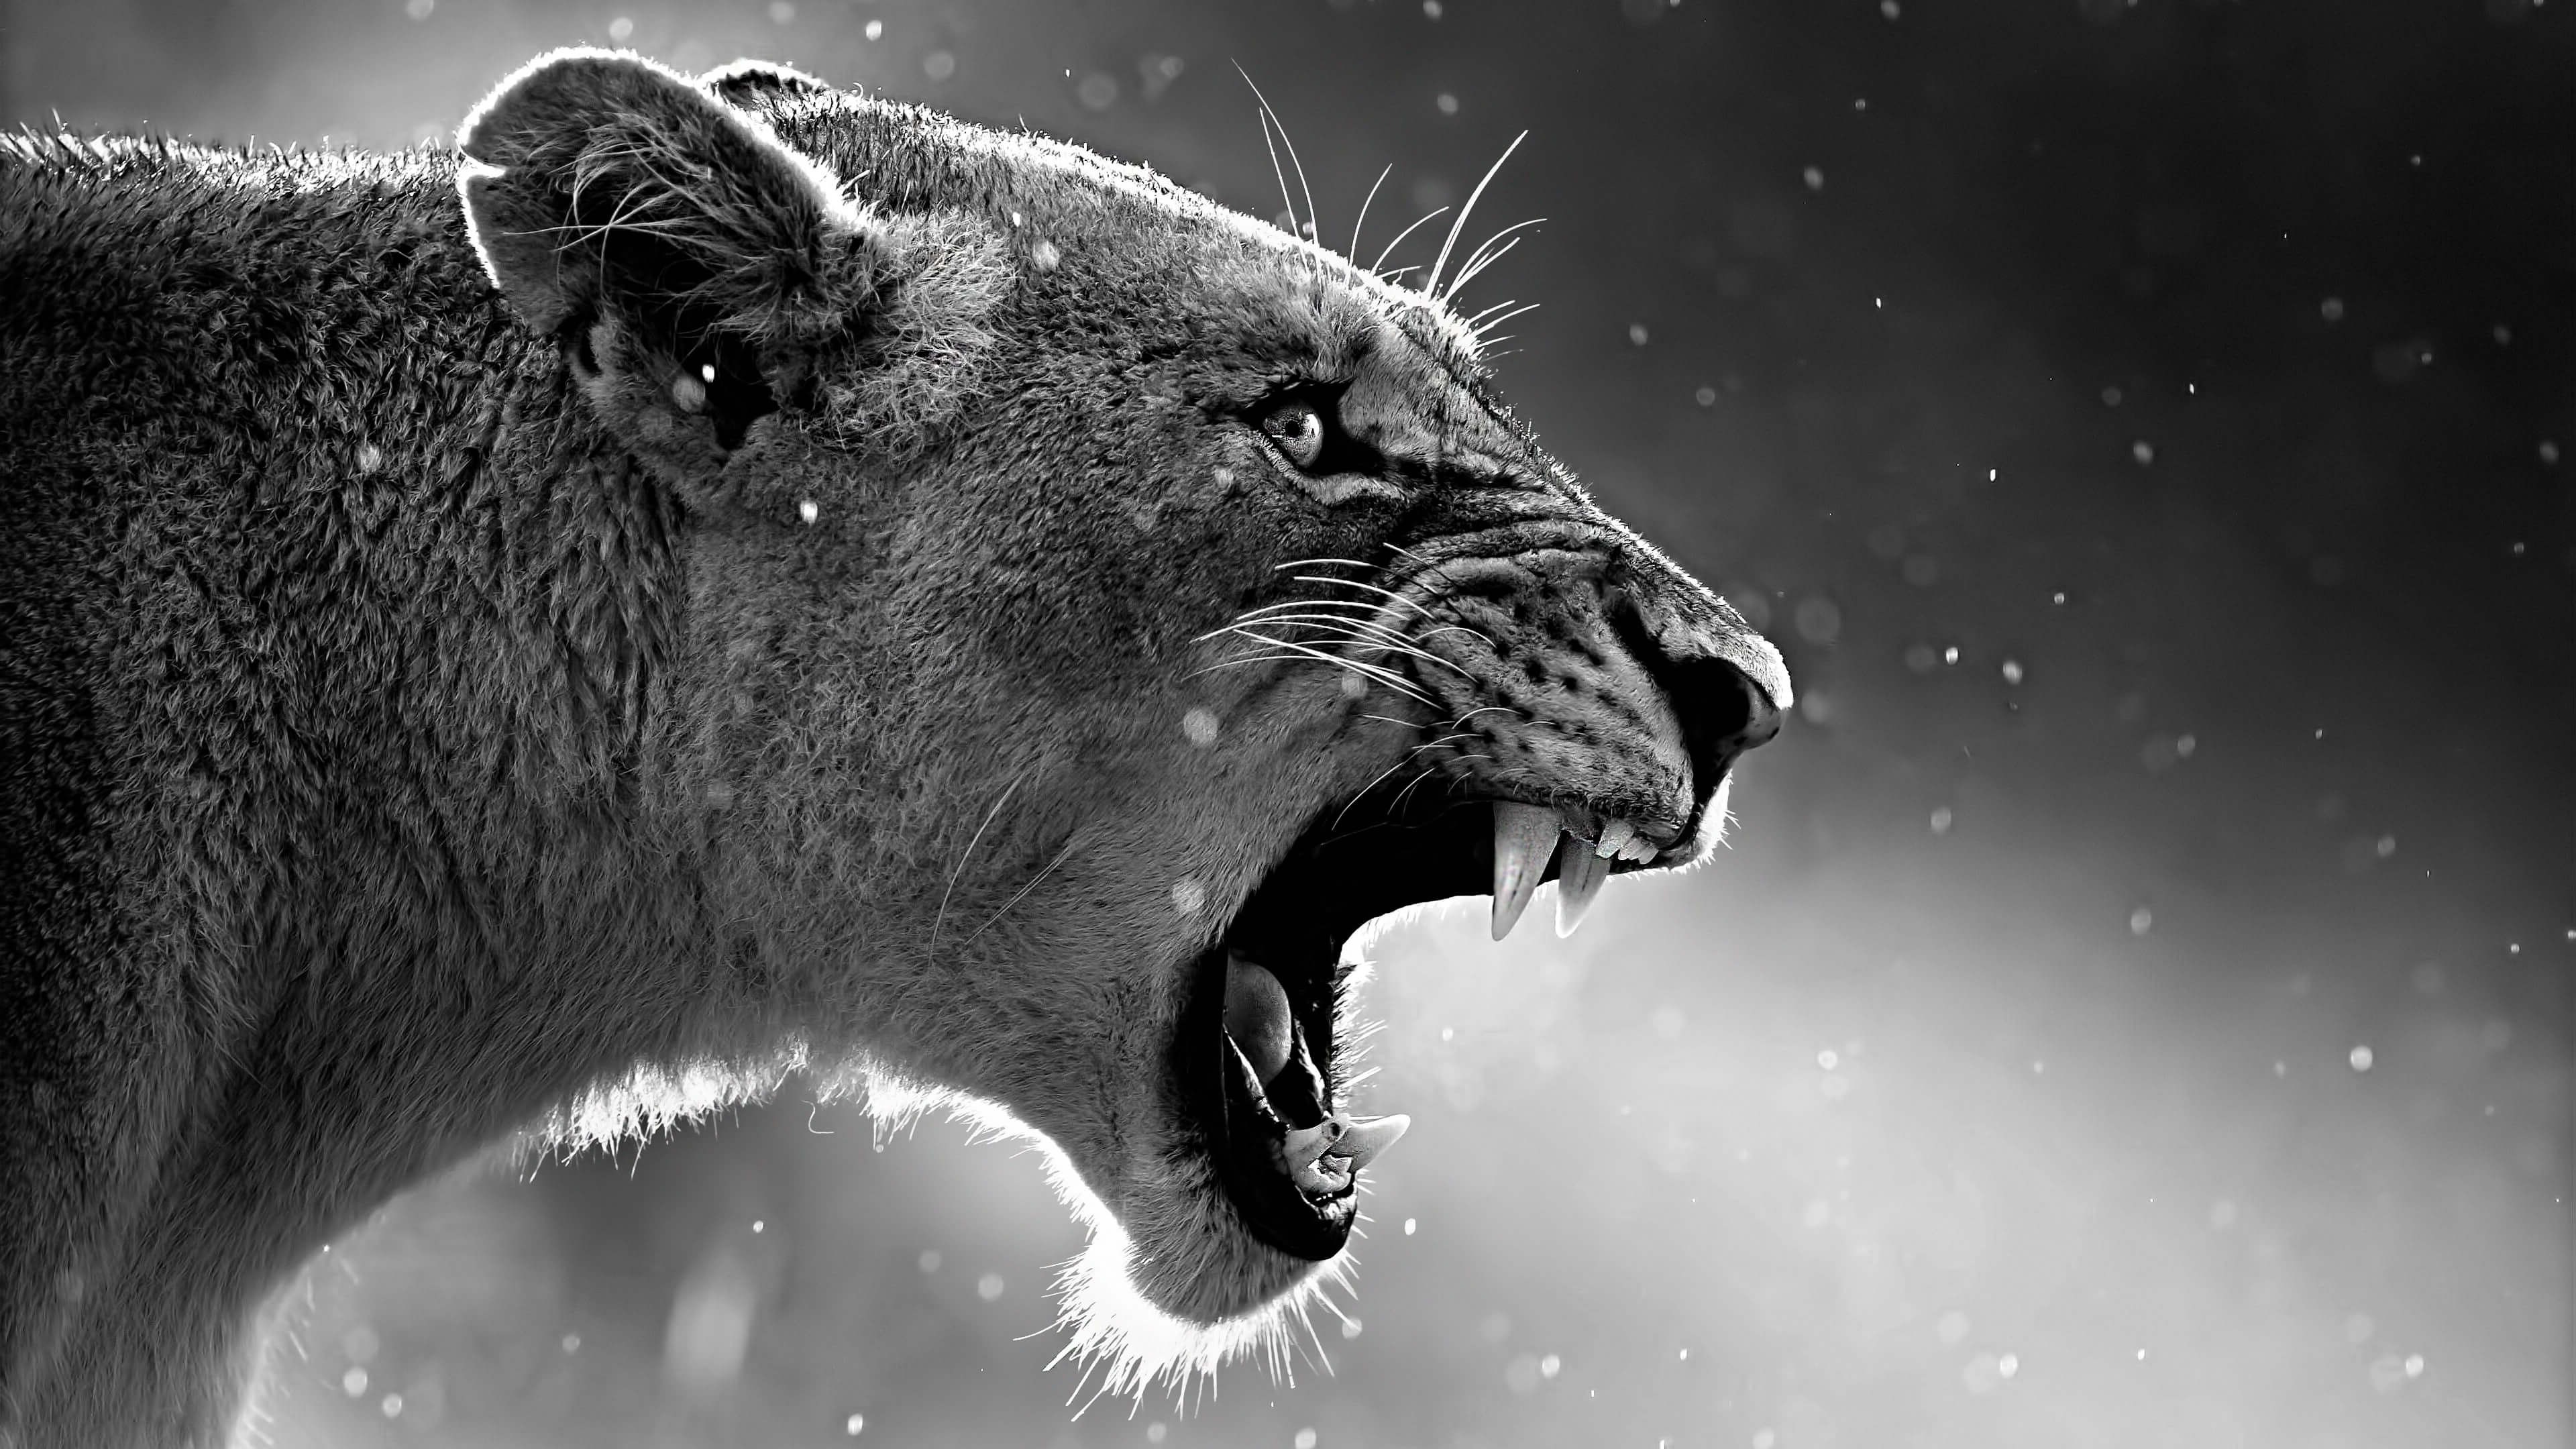 Lion Roaring, HD Animals, 4k Wallpaper, Image, Background